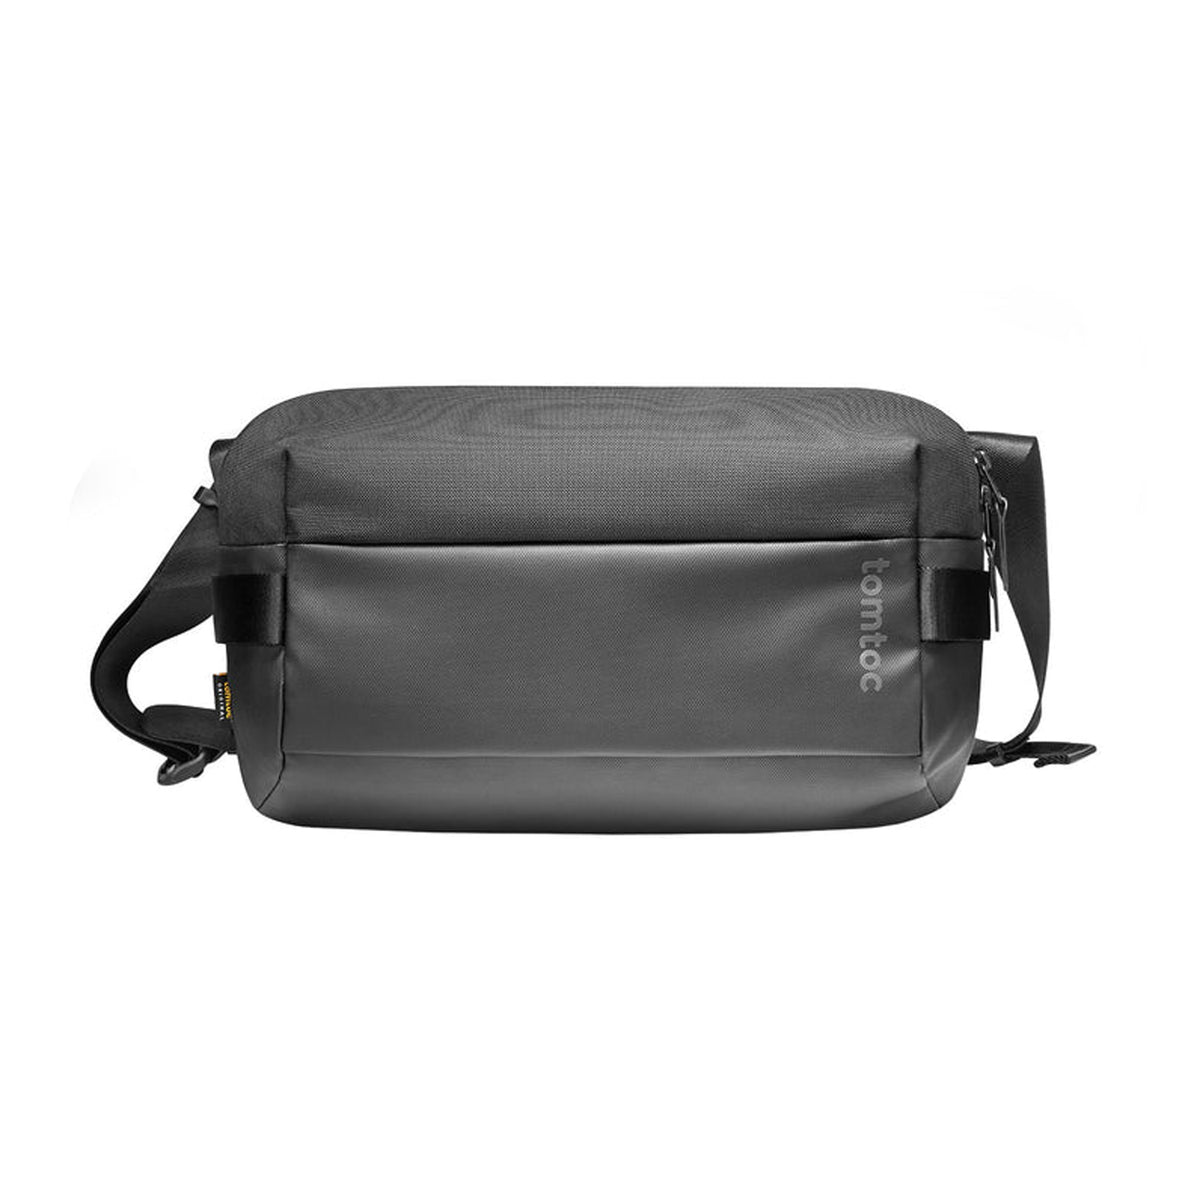 Tomtoc Explorer Series H02 Sling Bag with Minimalist EDC Design 7L